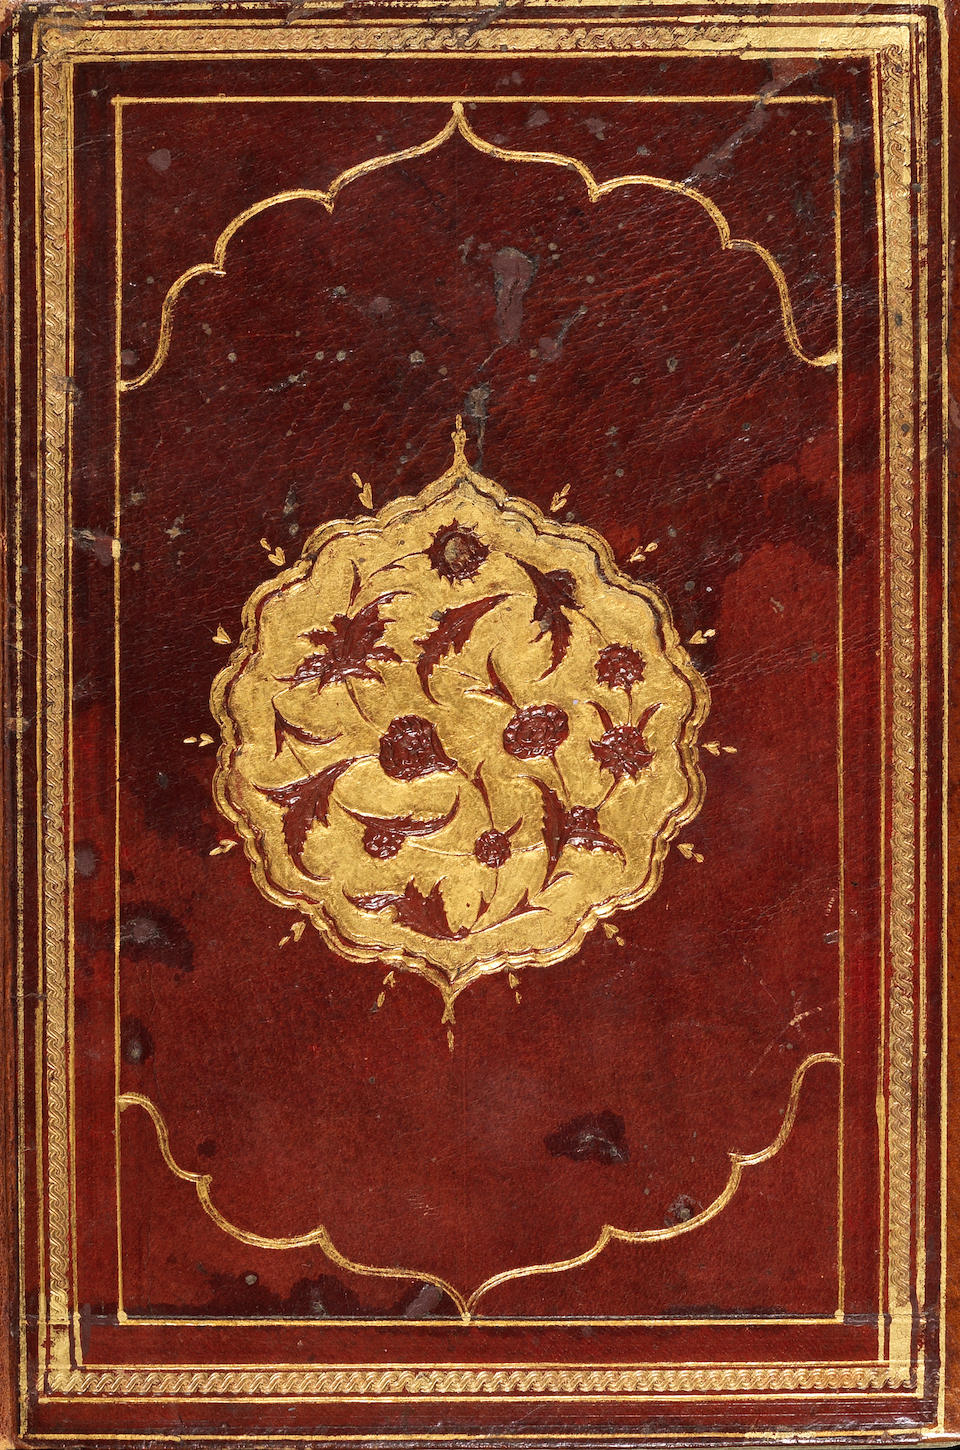 An illuminated Qur'an Ottoman Turkey, second half of the 16th Century